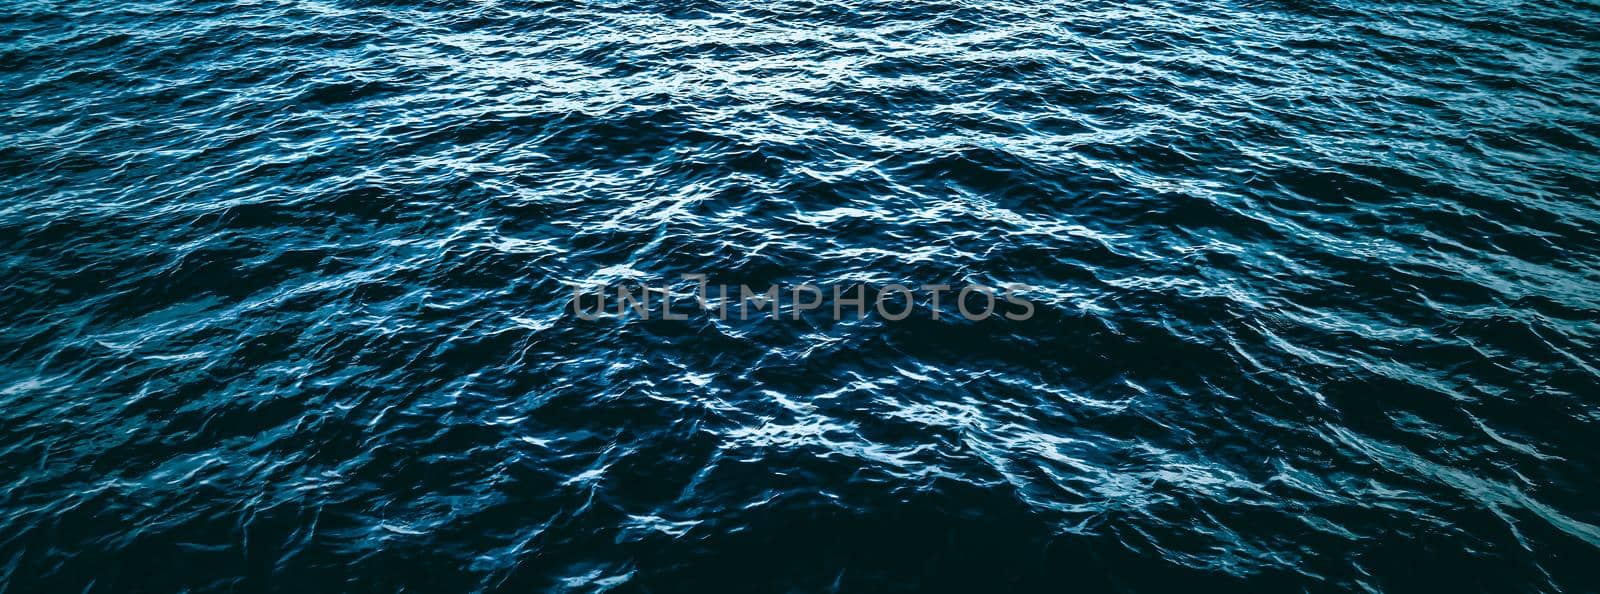 Deep blue ocean water texture, dark sea waves background as nature and environmental design.